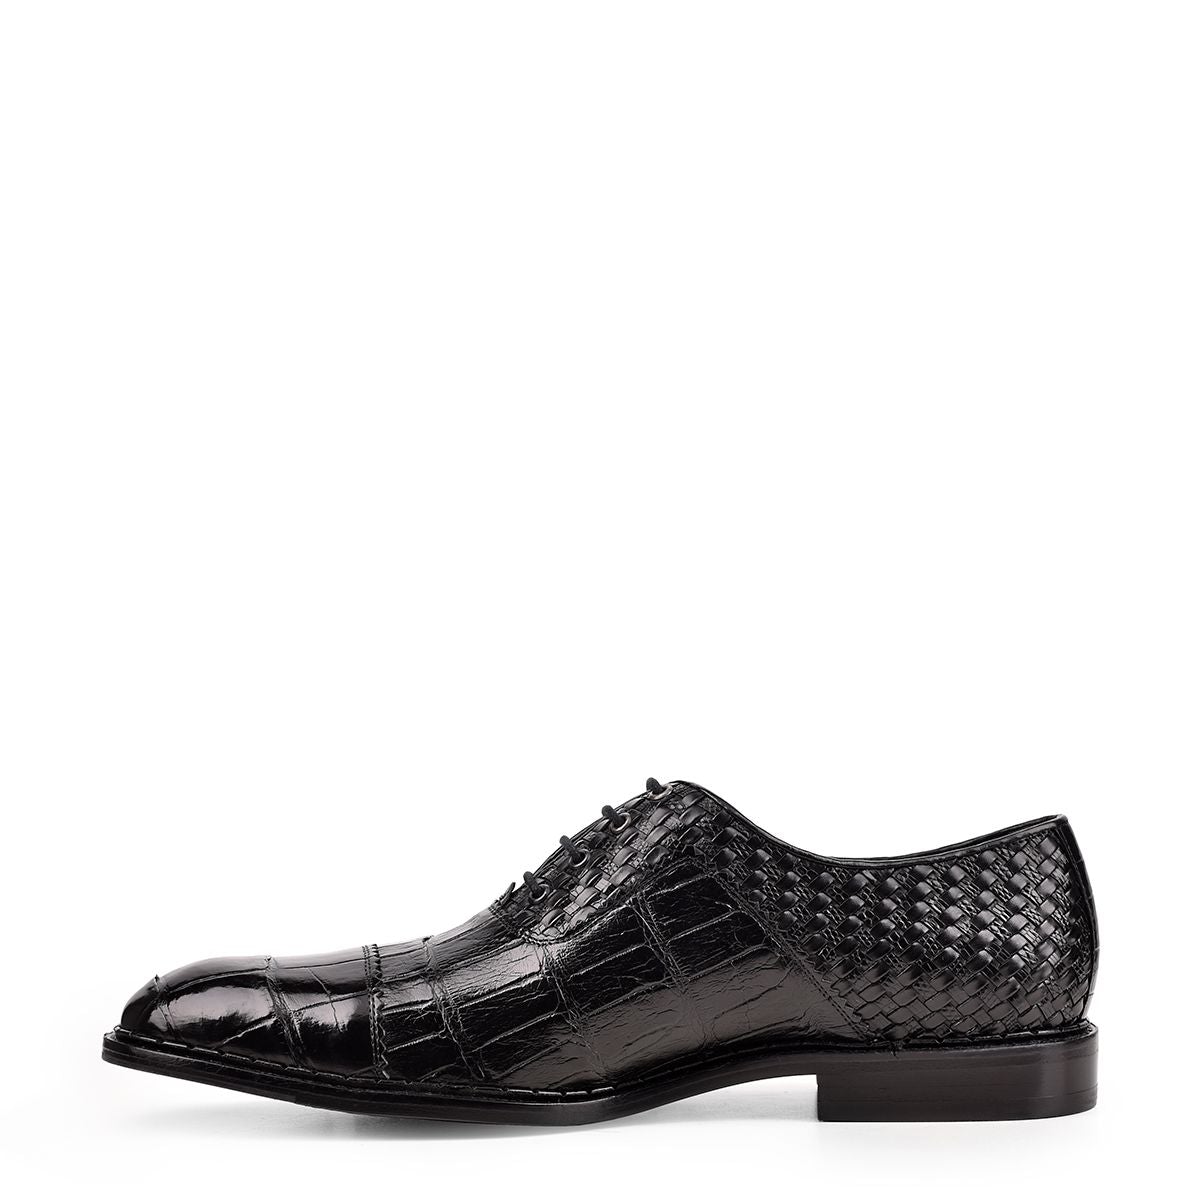 42FLPTE - Cuadra black fashion dress alligator woven oxford shoes for men-FRANCO CUADRA-Kuet-Cuadra-Boots